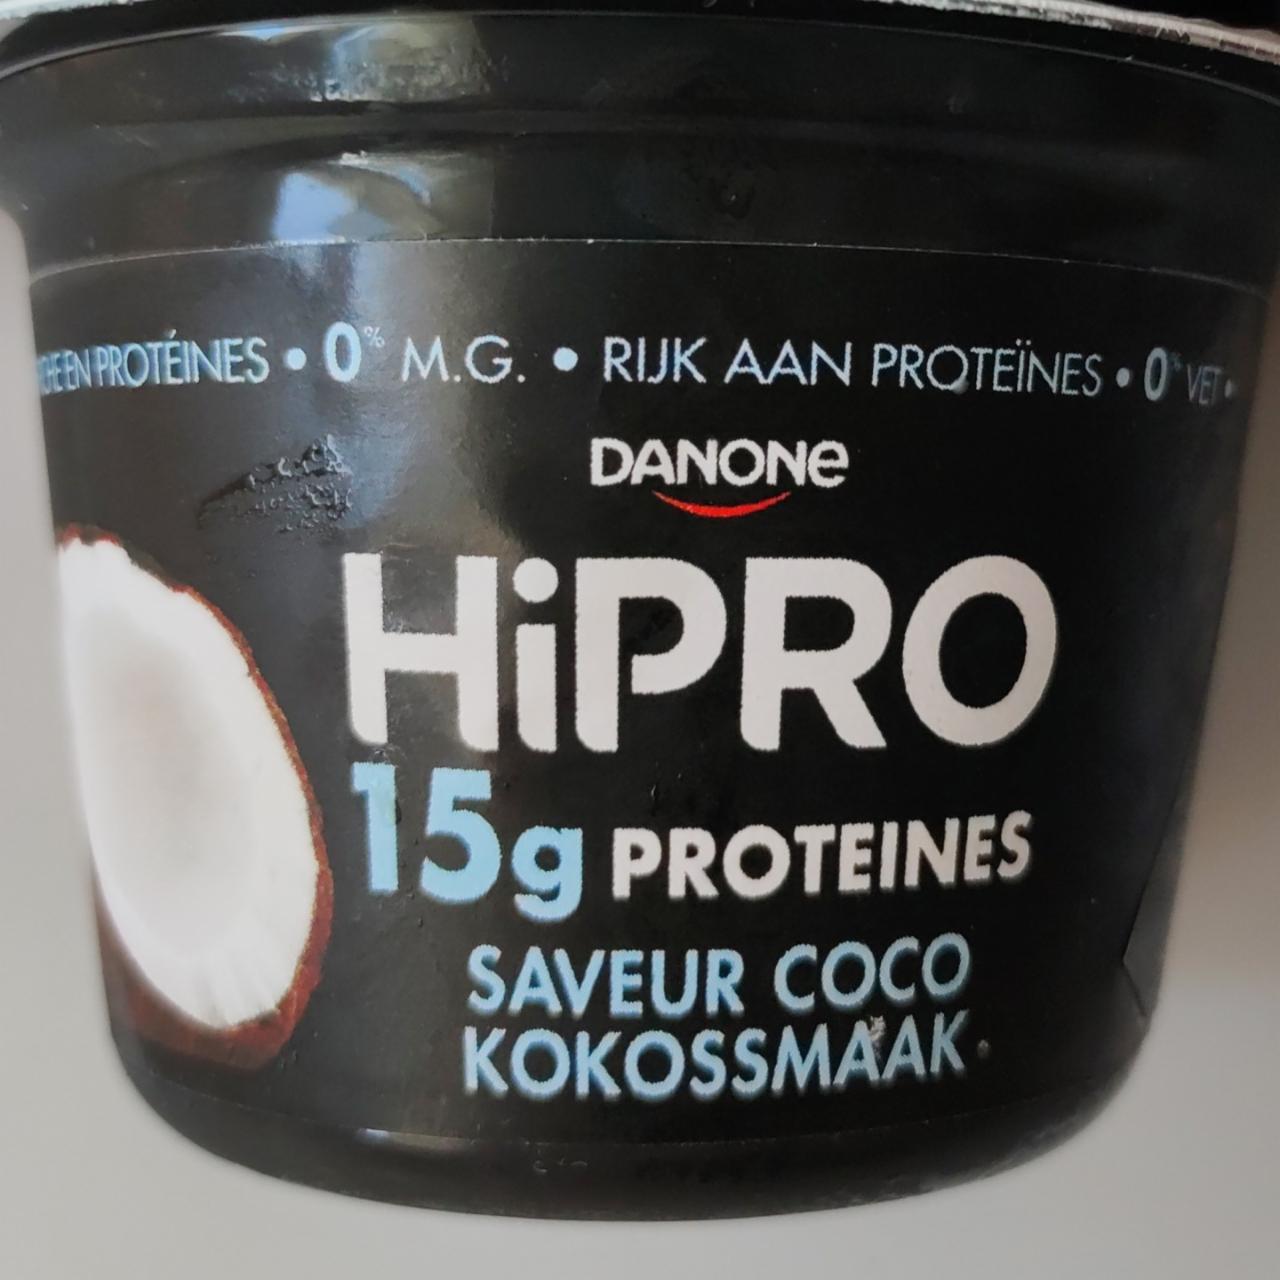 Fotografie - 15g proteines Saveur coco kokossmaak Danone